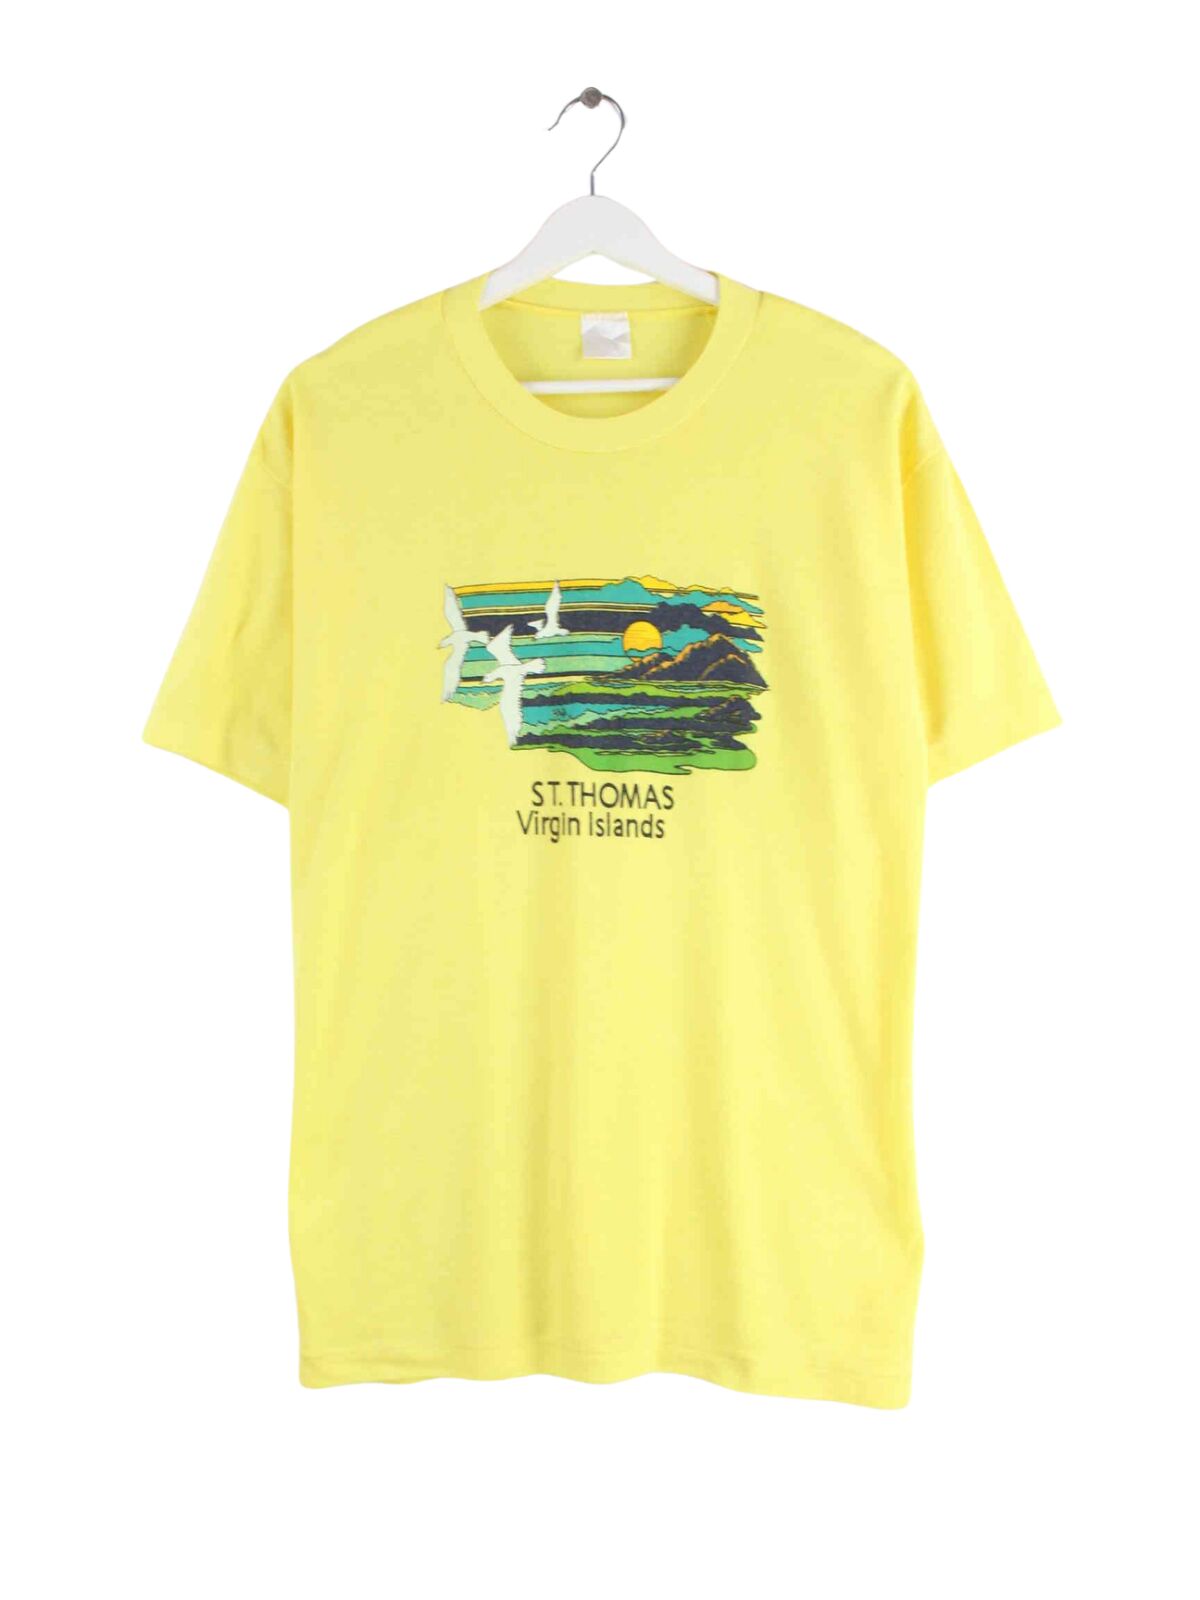 Vintage 80s Virgin Islands Print Single Stitched T-Shirt Gelb M (front image)